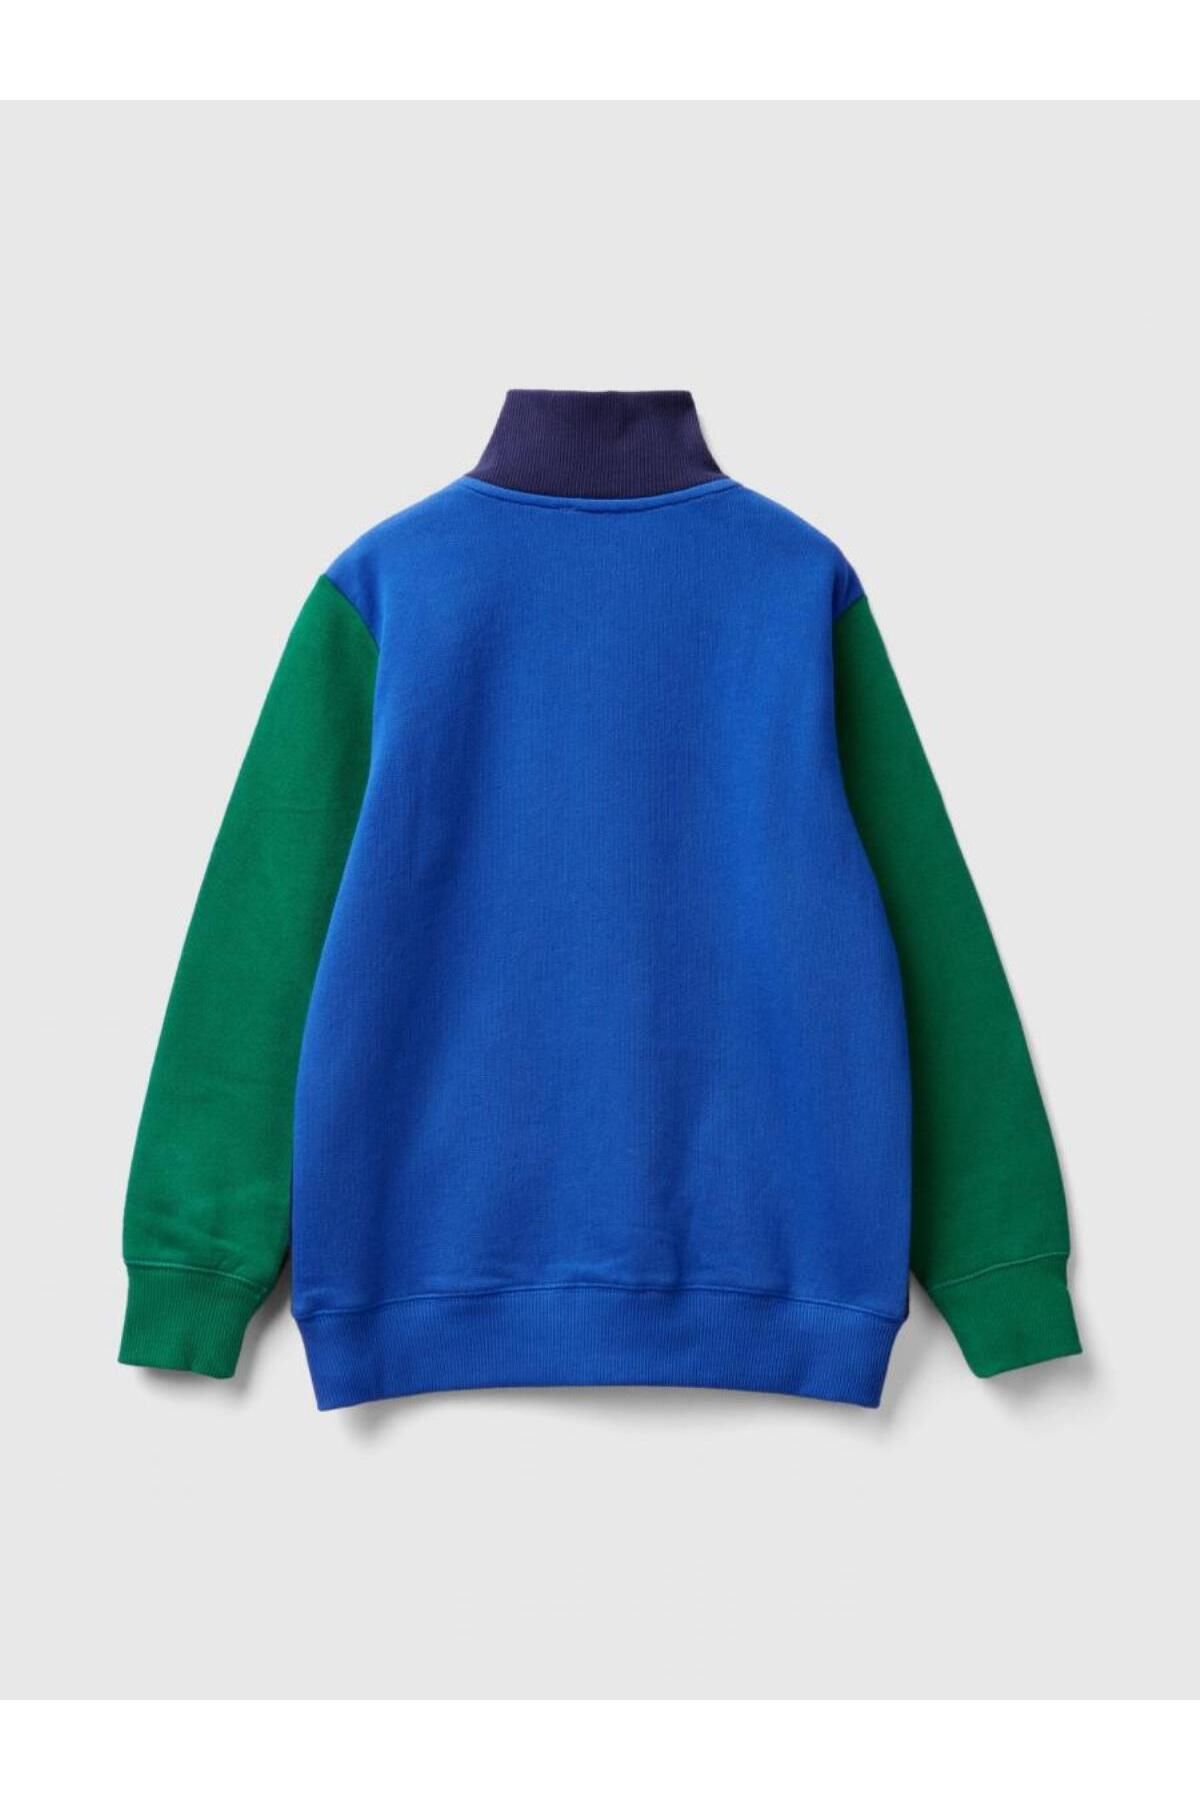 United Colors of Benetton Erkek Çocuk Sweatshirt 3j68c501b-r